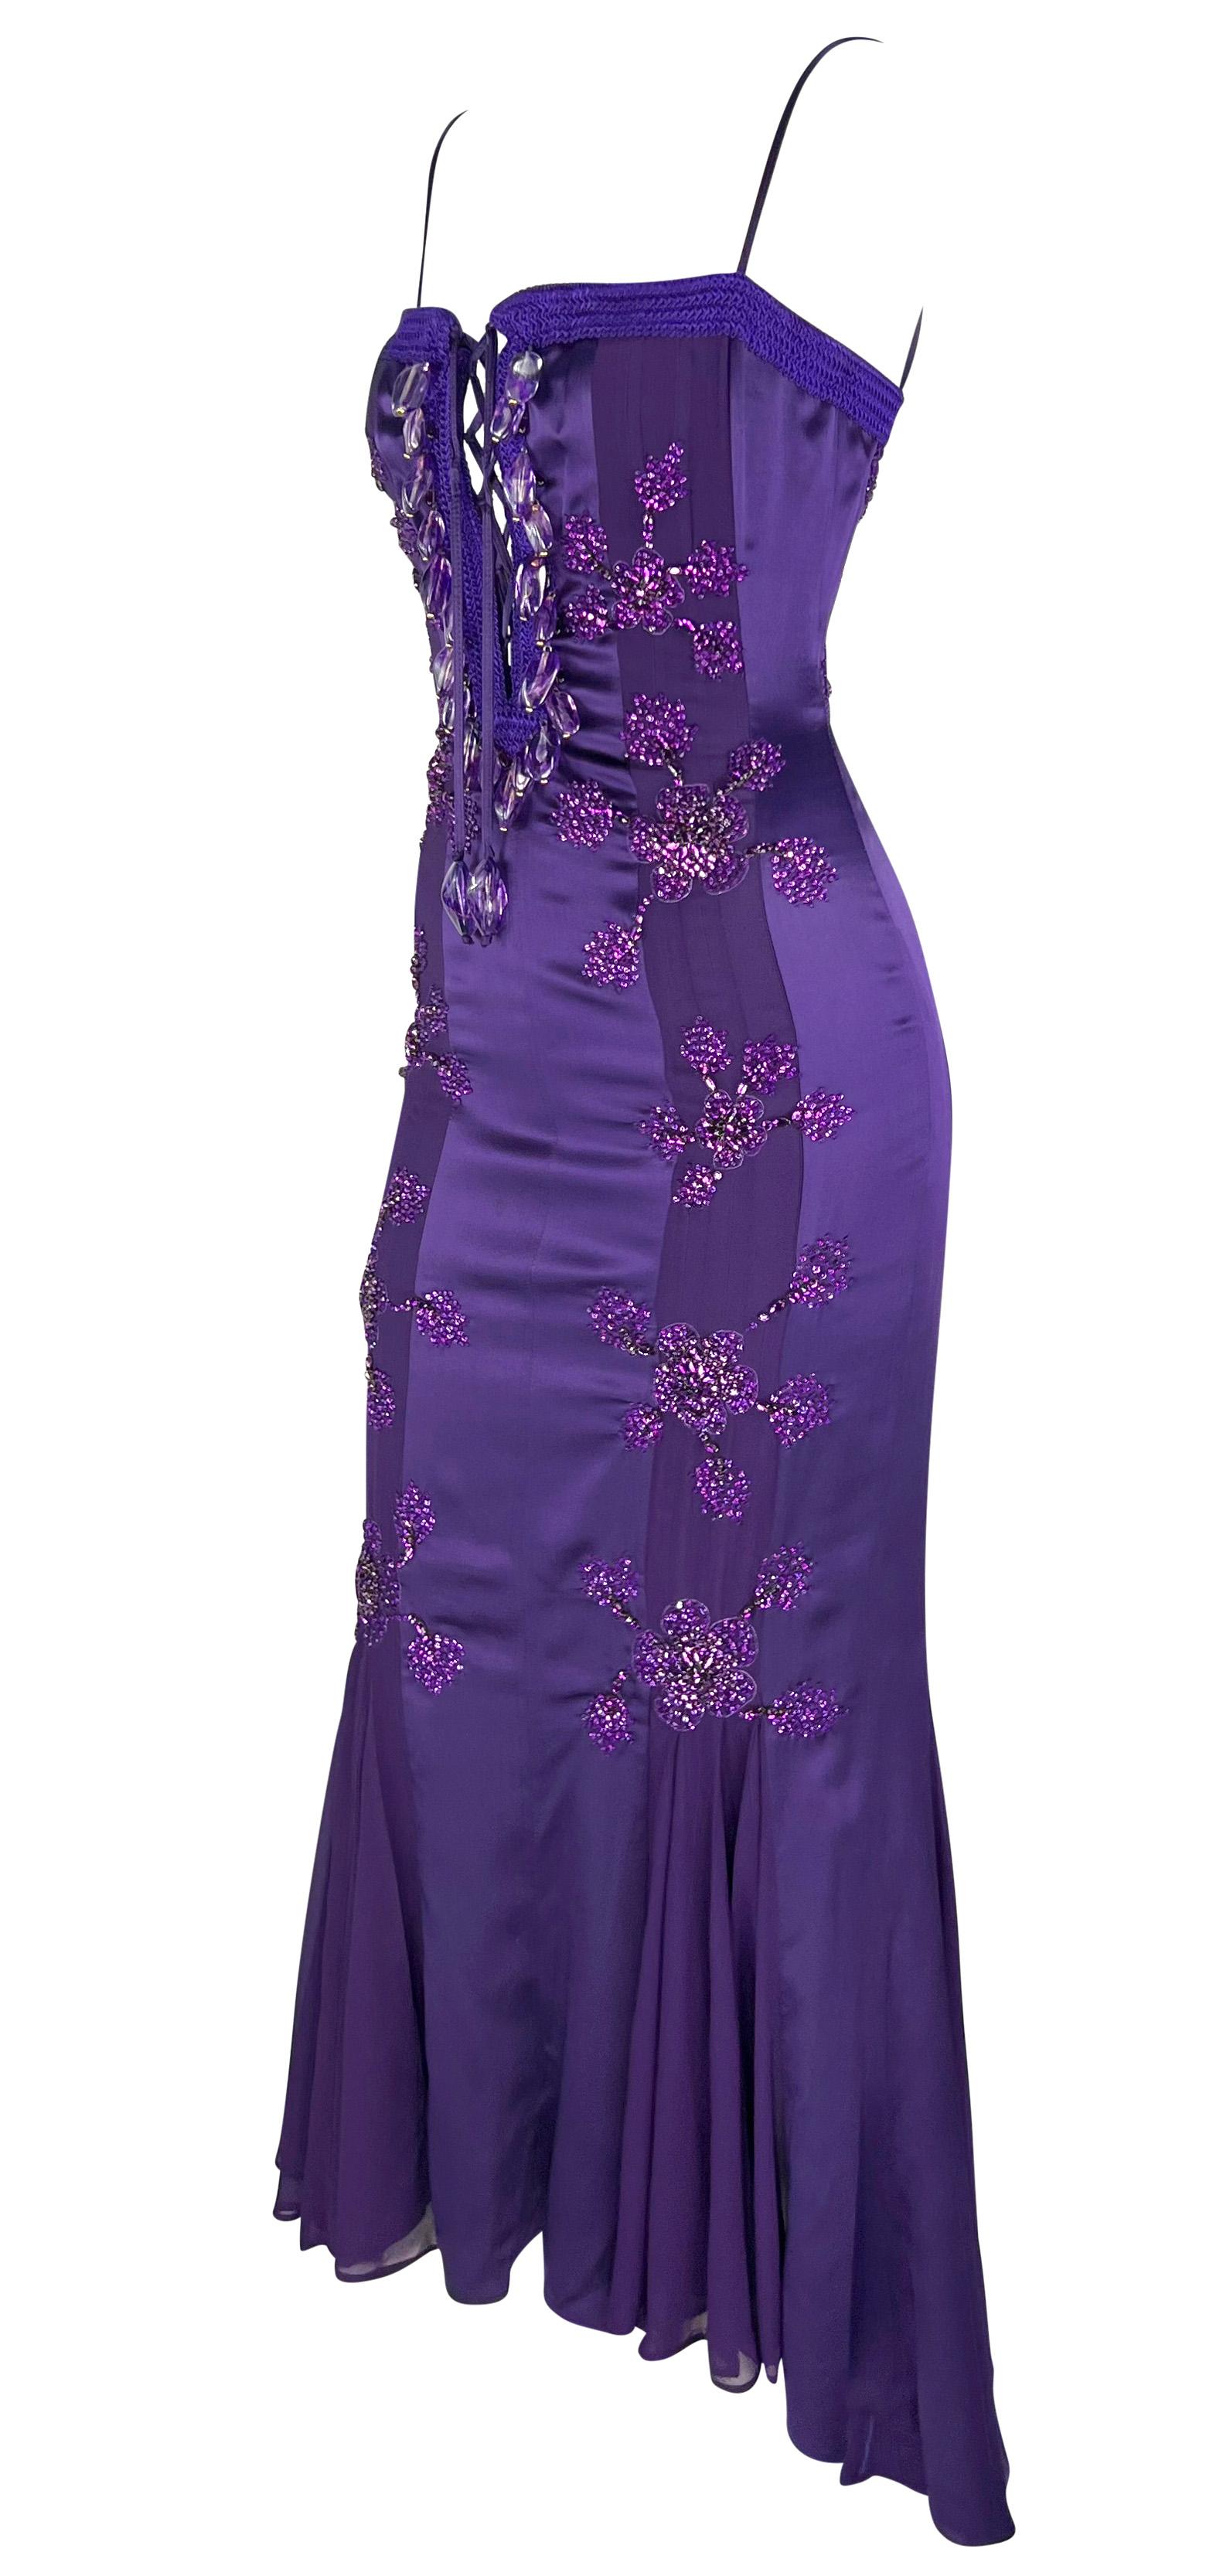 S/S 2005 Emanuel Ungaro by Giambattista Valli Rhinestone Purple Lace-Up Gown For Sale 4